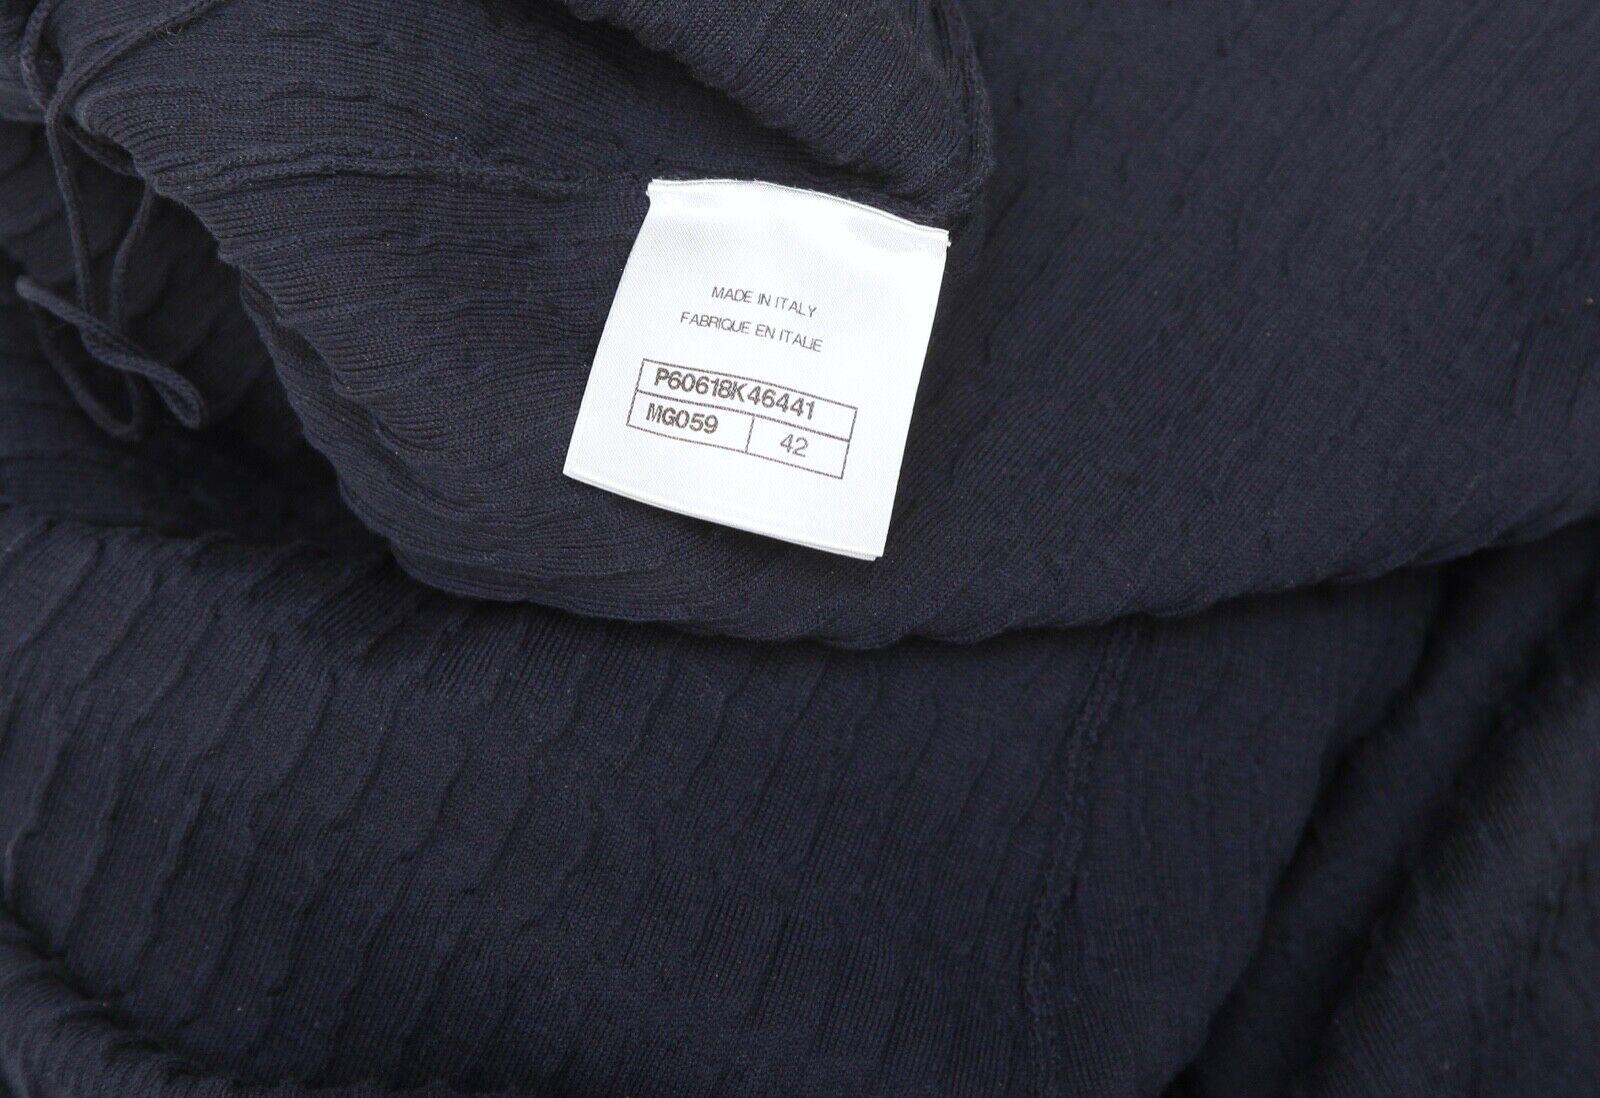 CHANEL Sweater Knit Dress Navy Blue White Short Sleeve Sz 42 3